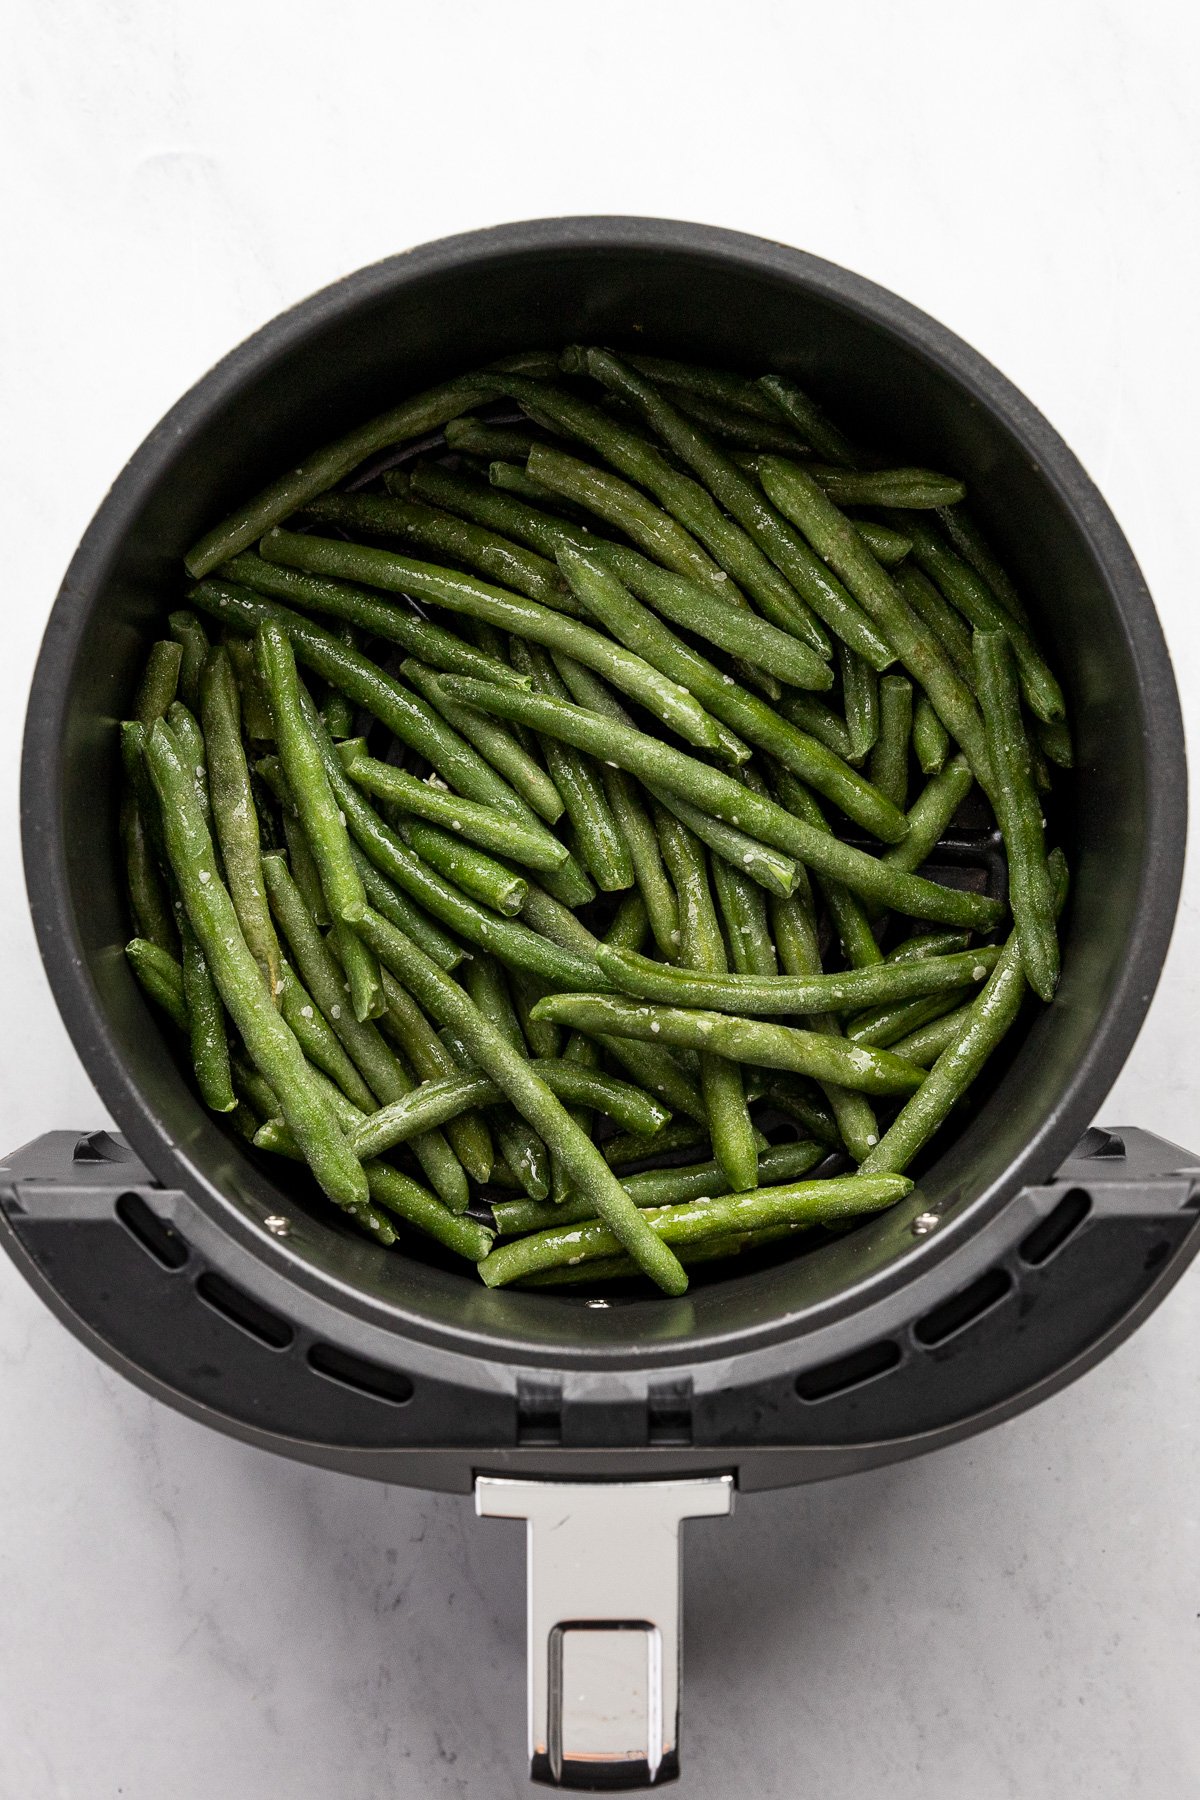 Frozen green beans spread in air fryer basket.